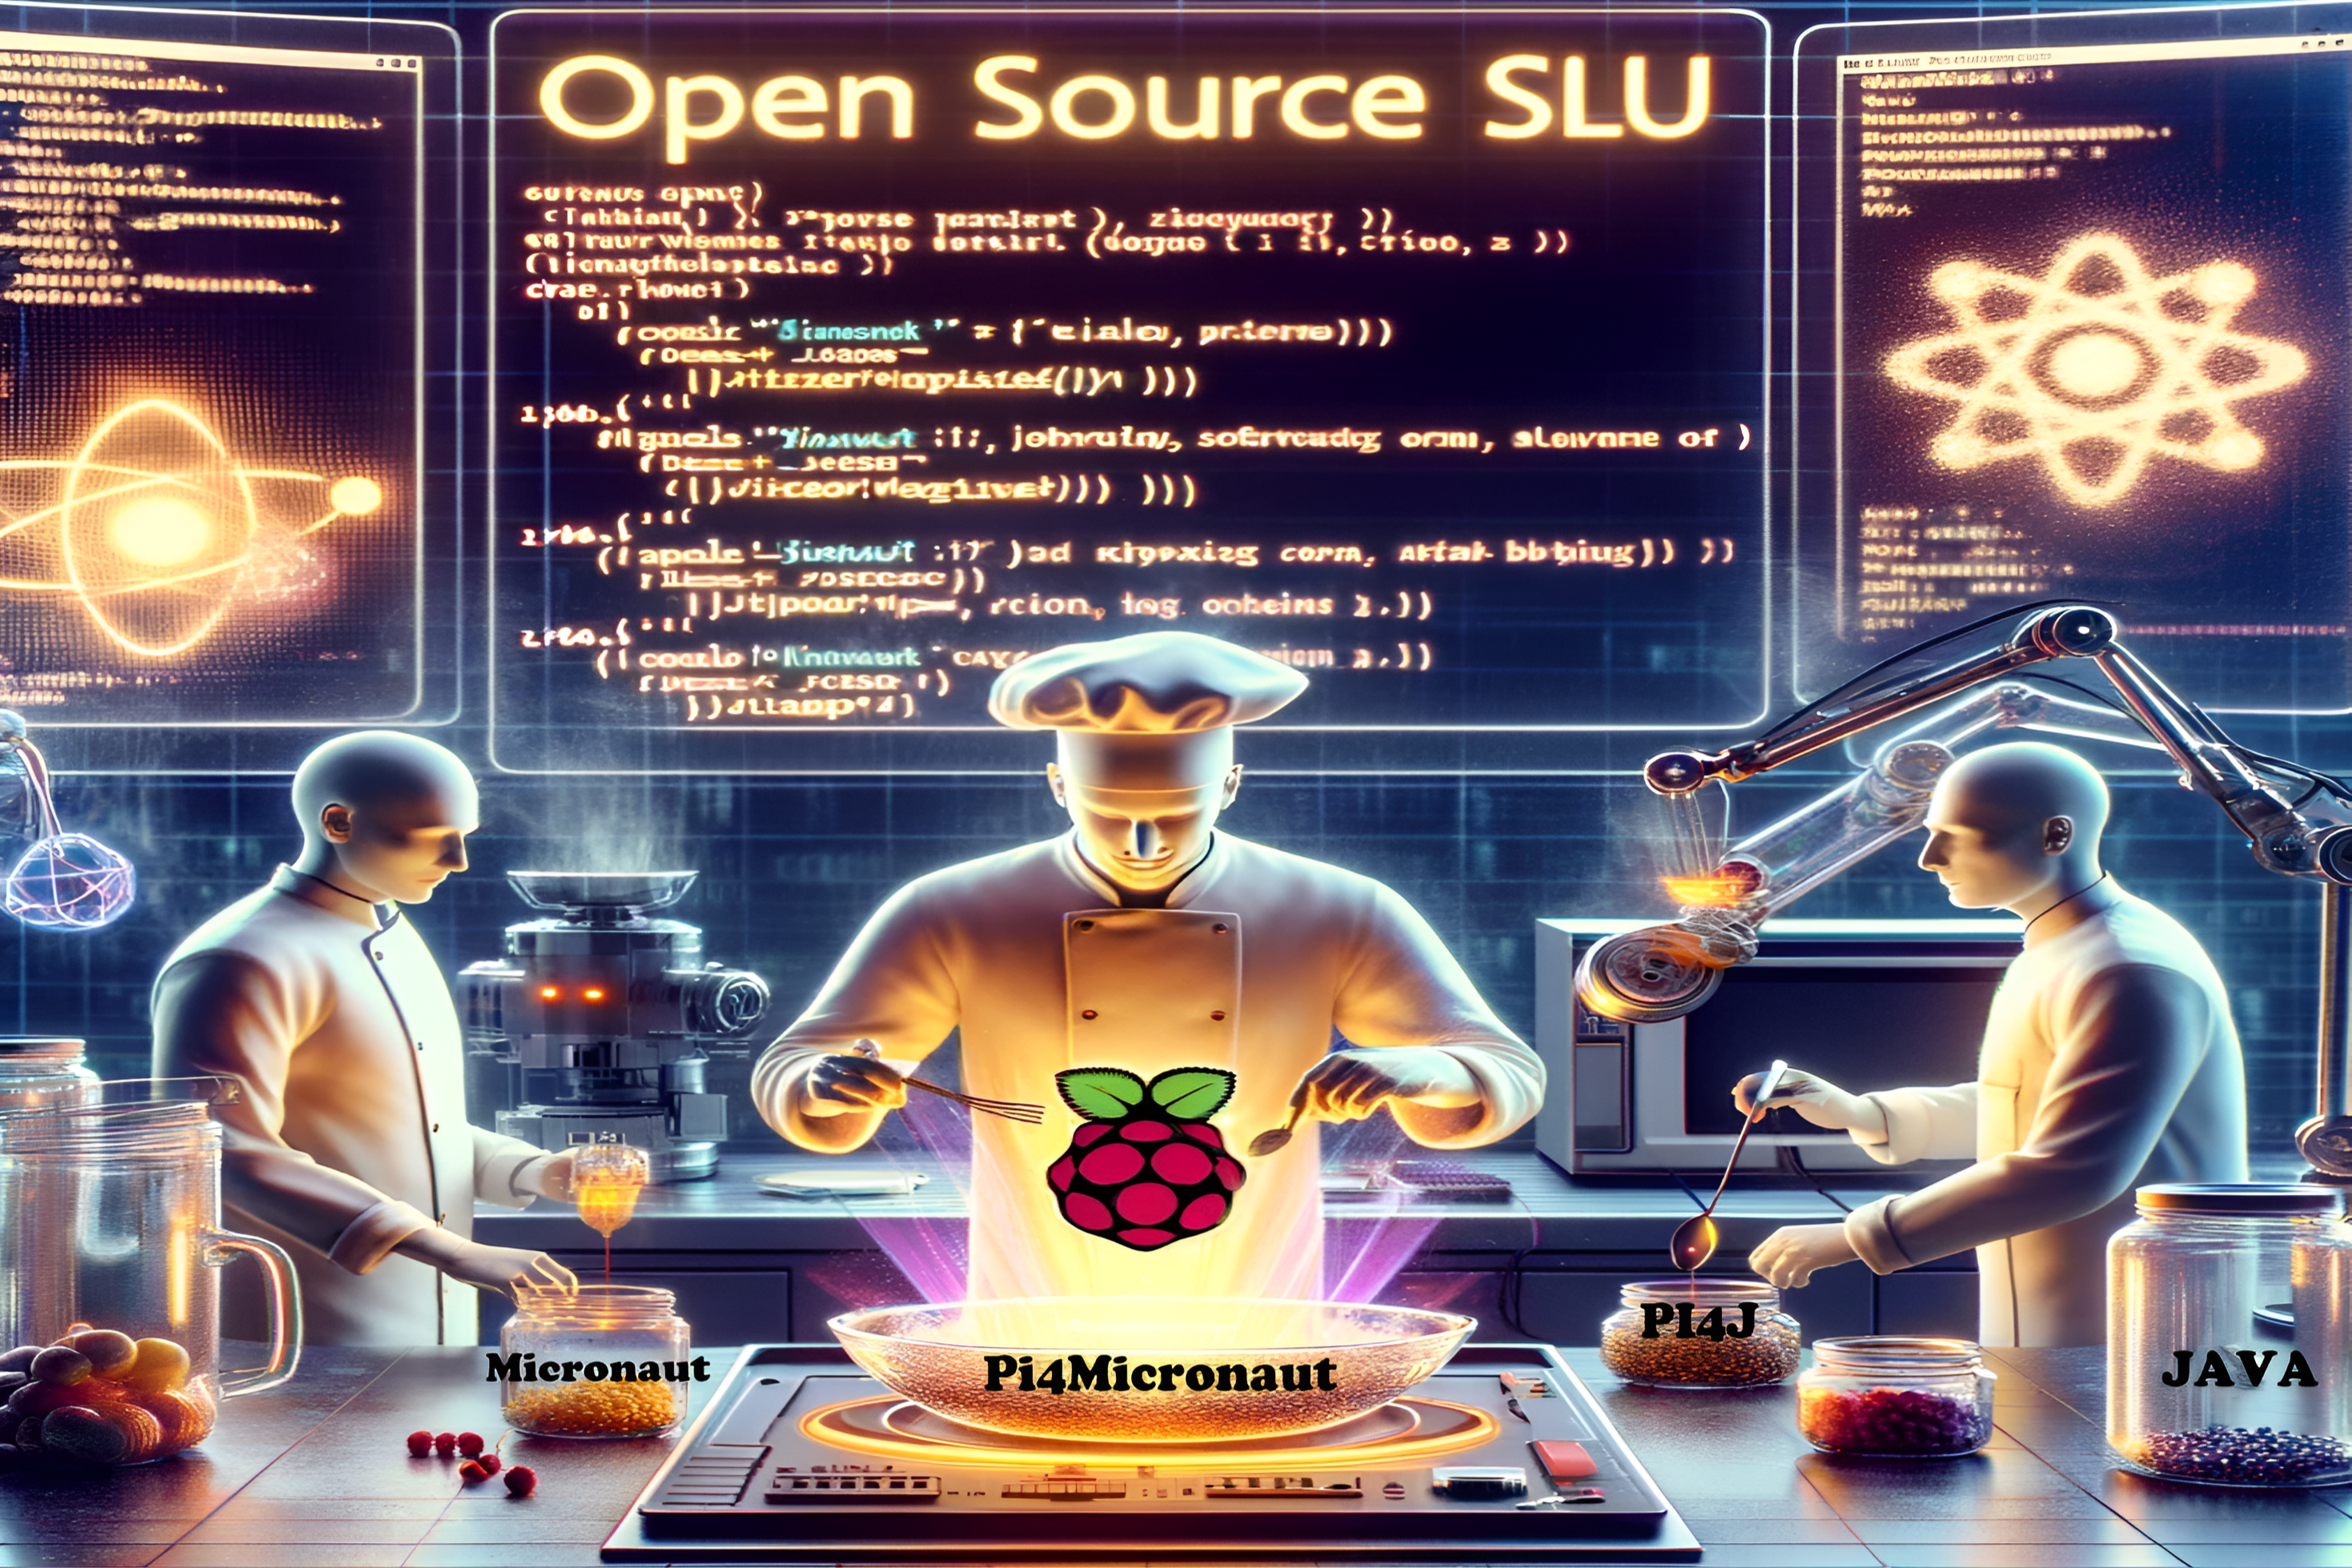 Baking Pi4Micronaut at Open Source with SLU